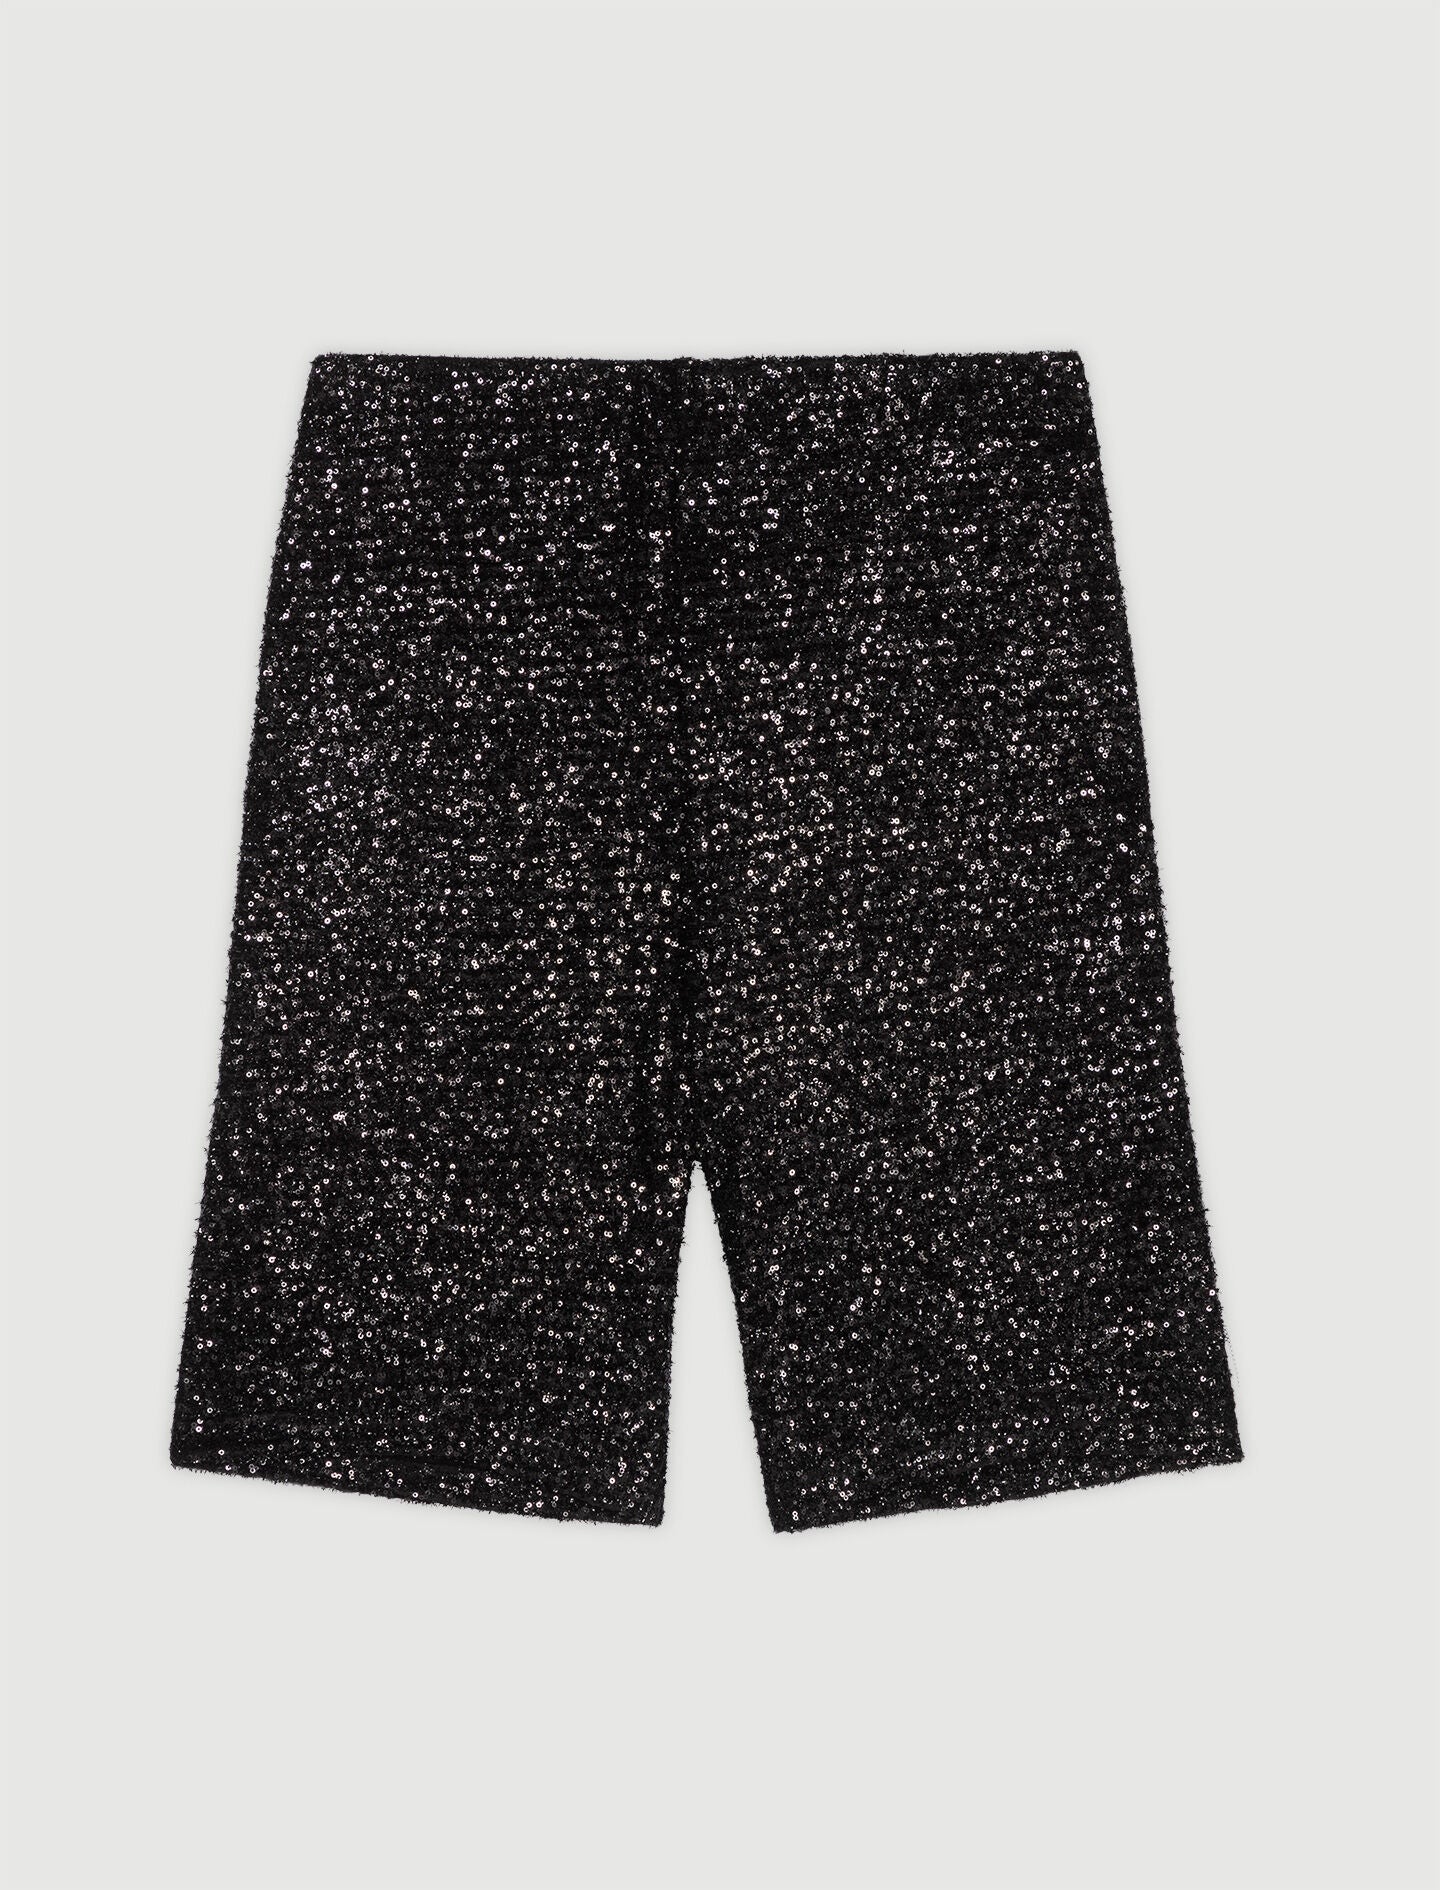 Black-glittery cycling shorts